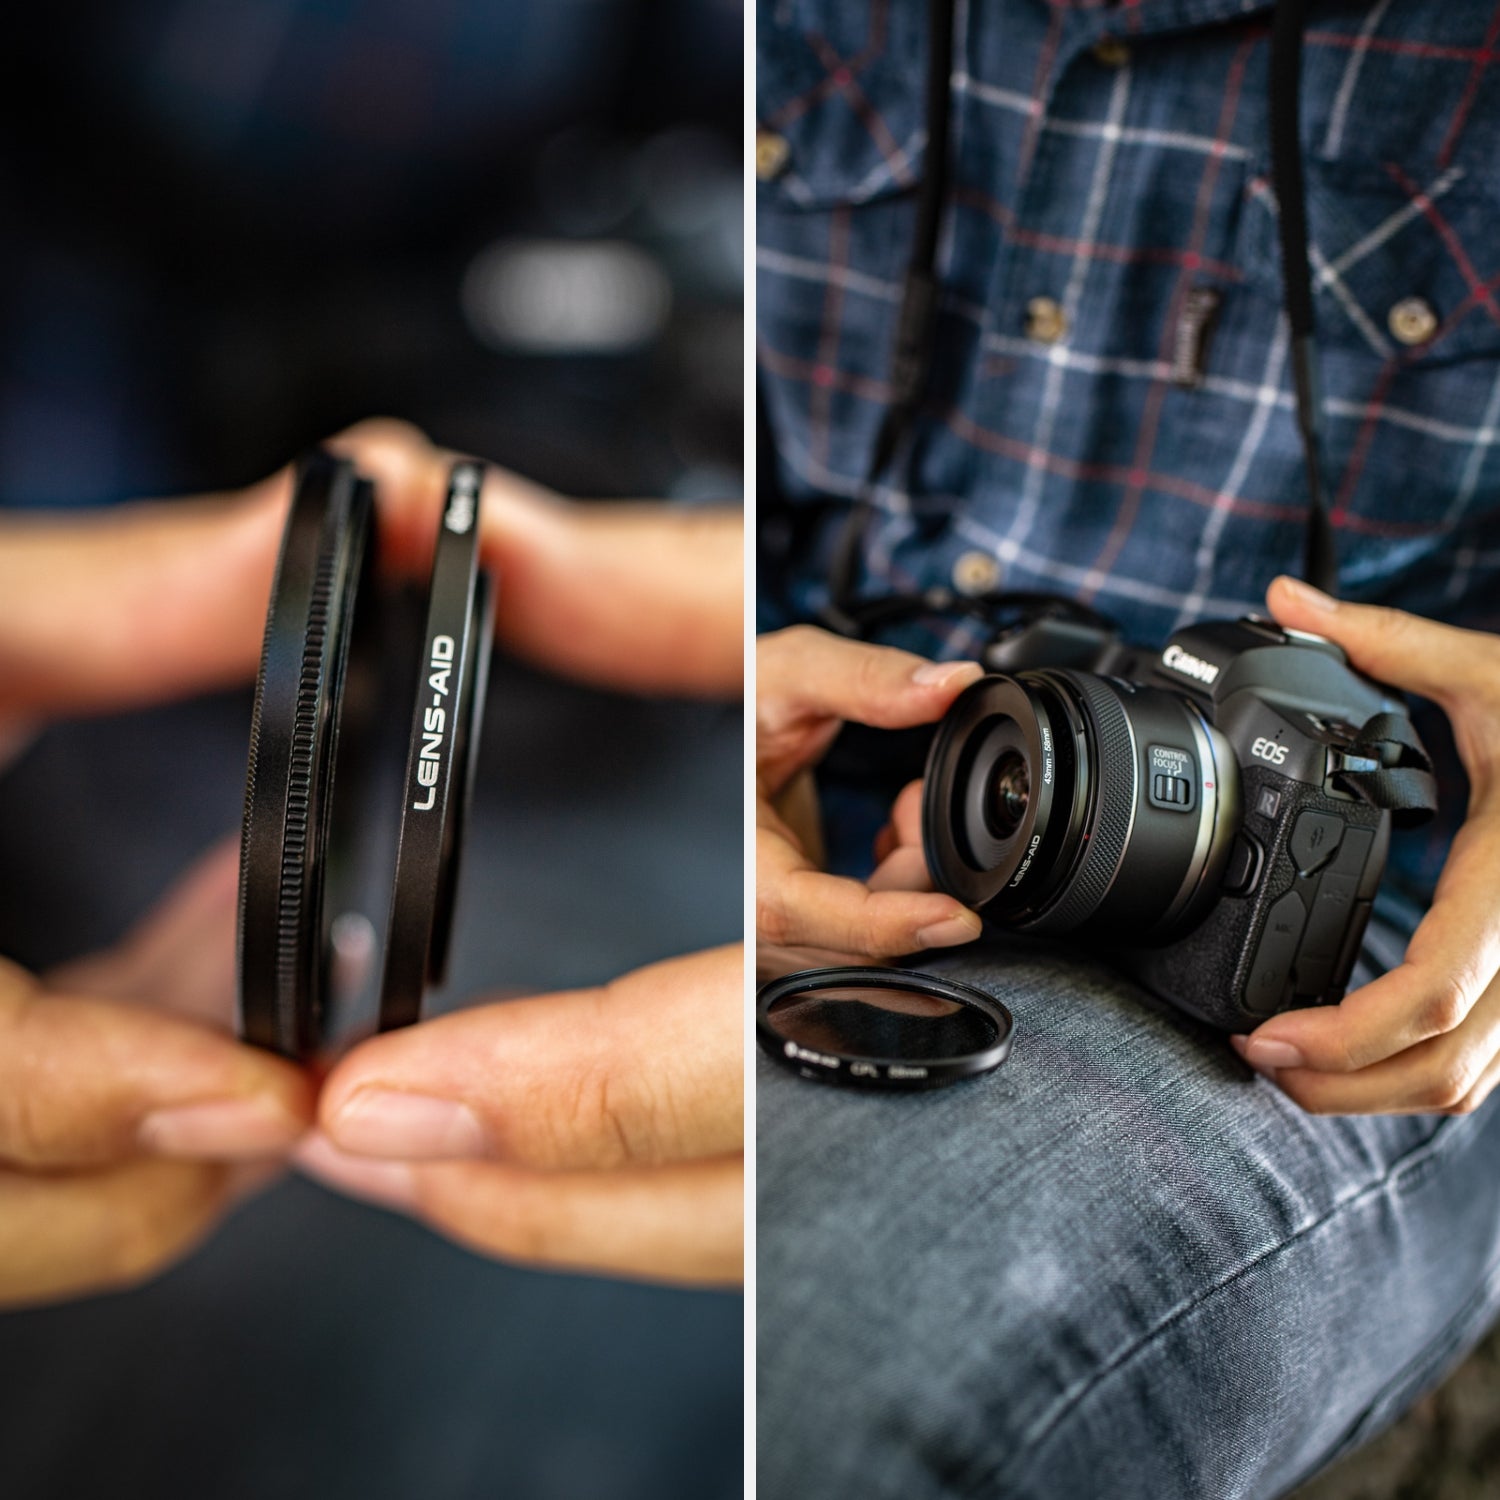 Step Up Ring aus Metall als Adapter für Kamerafilter/Objektive